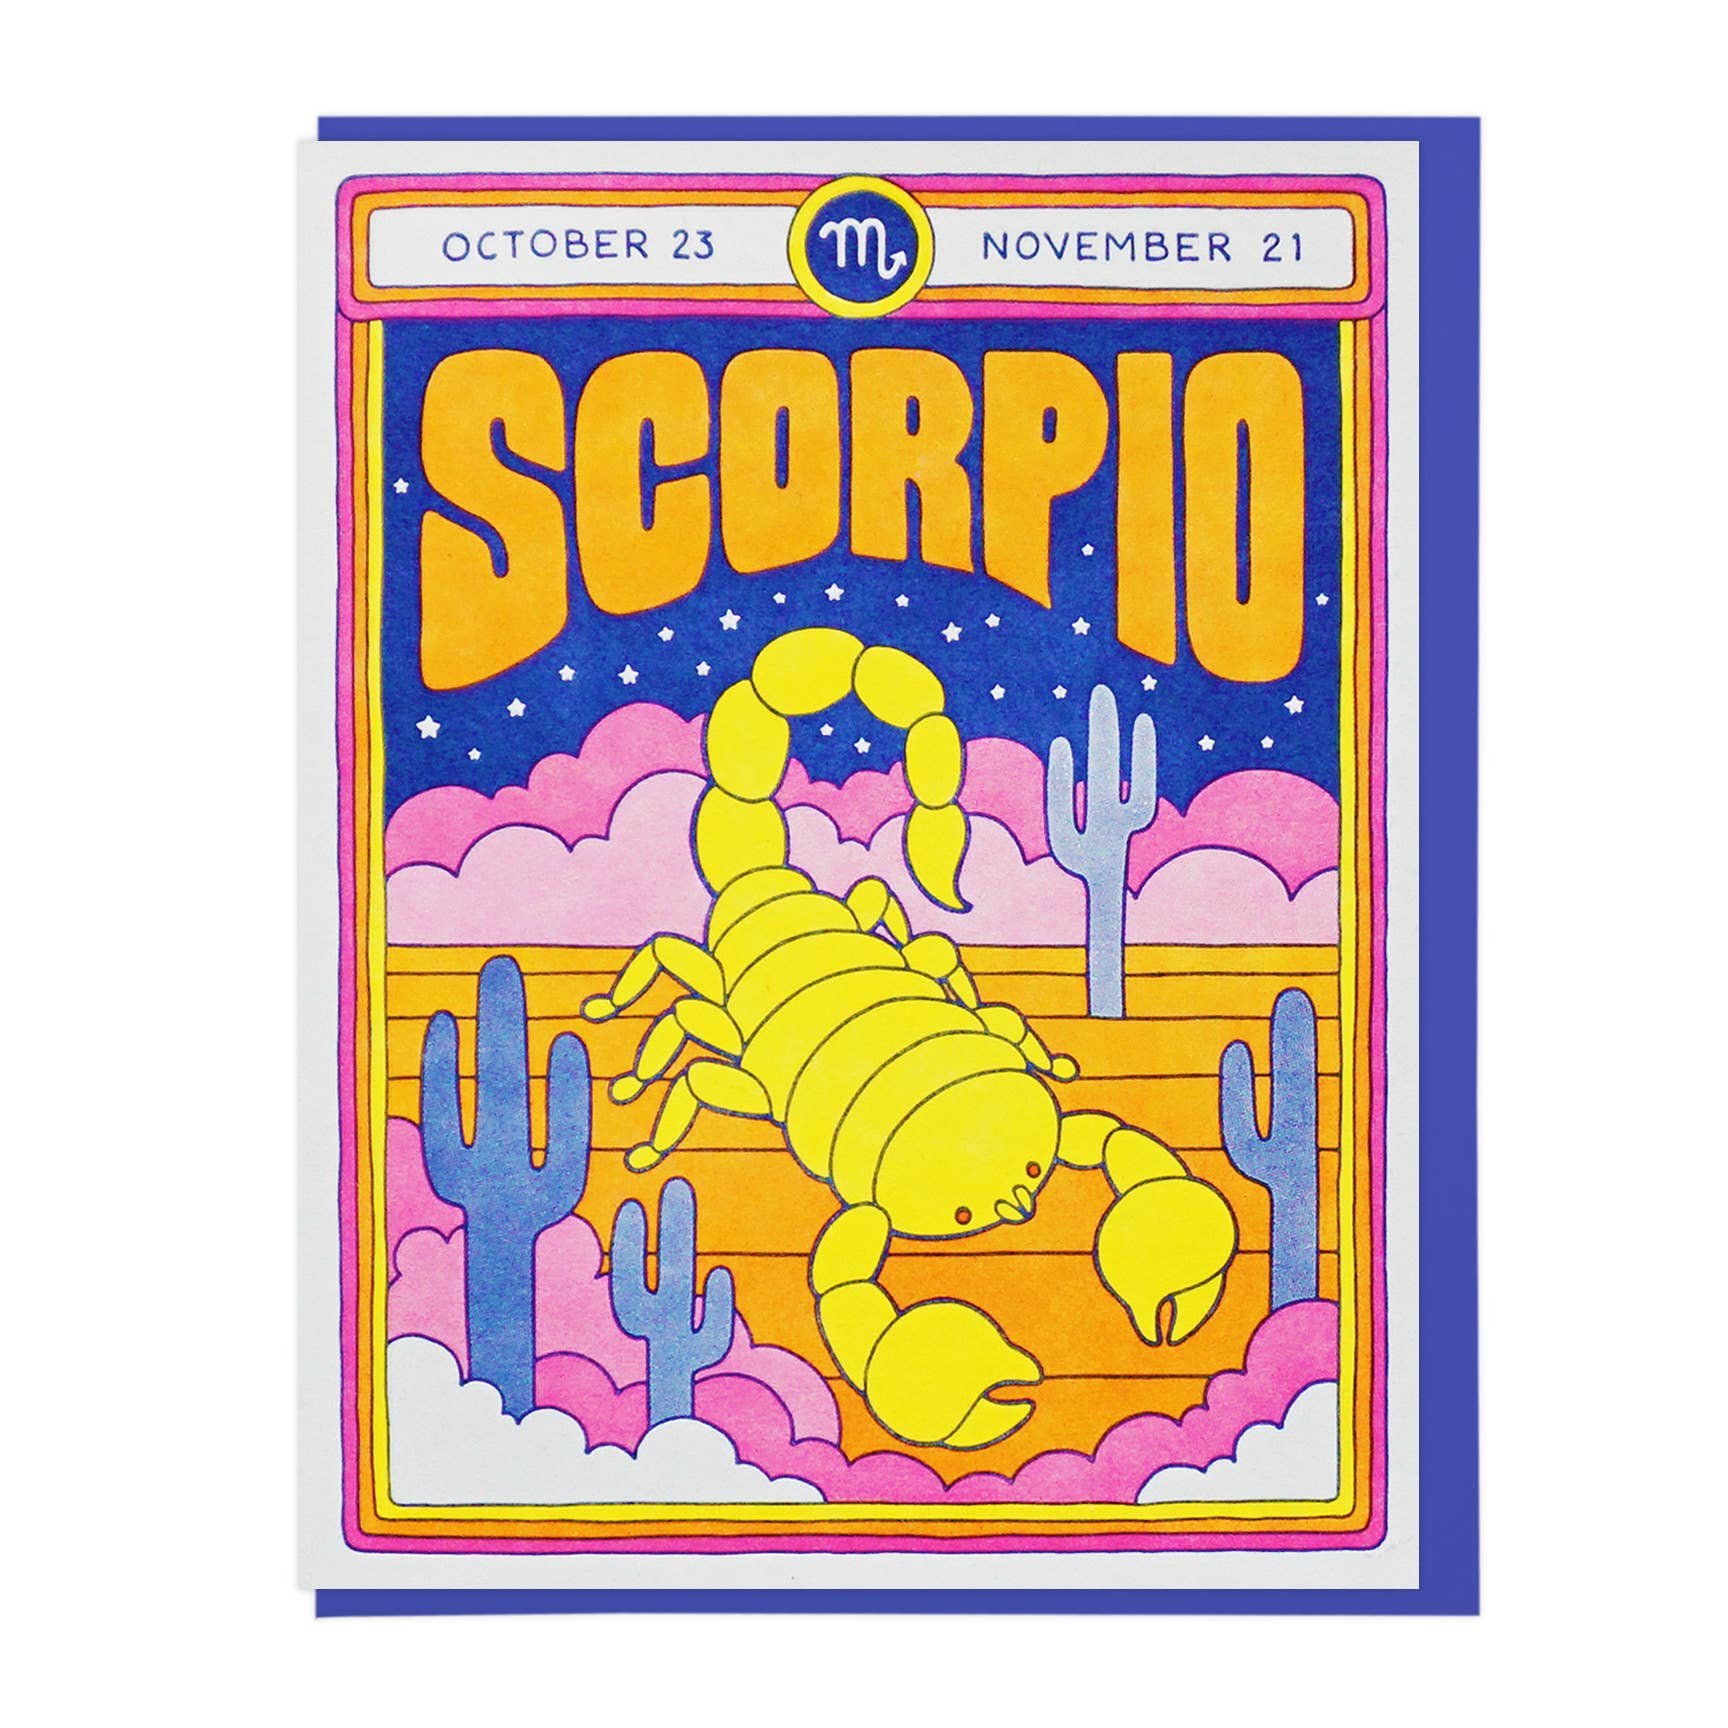 "Scorpio" Card